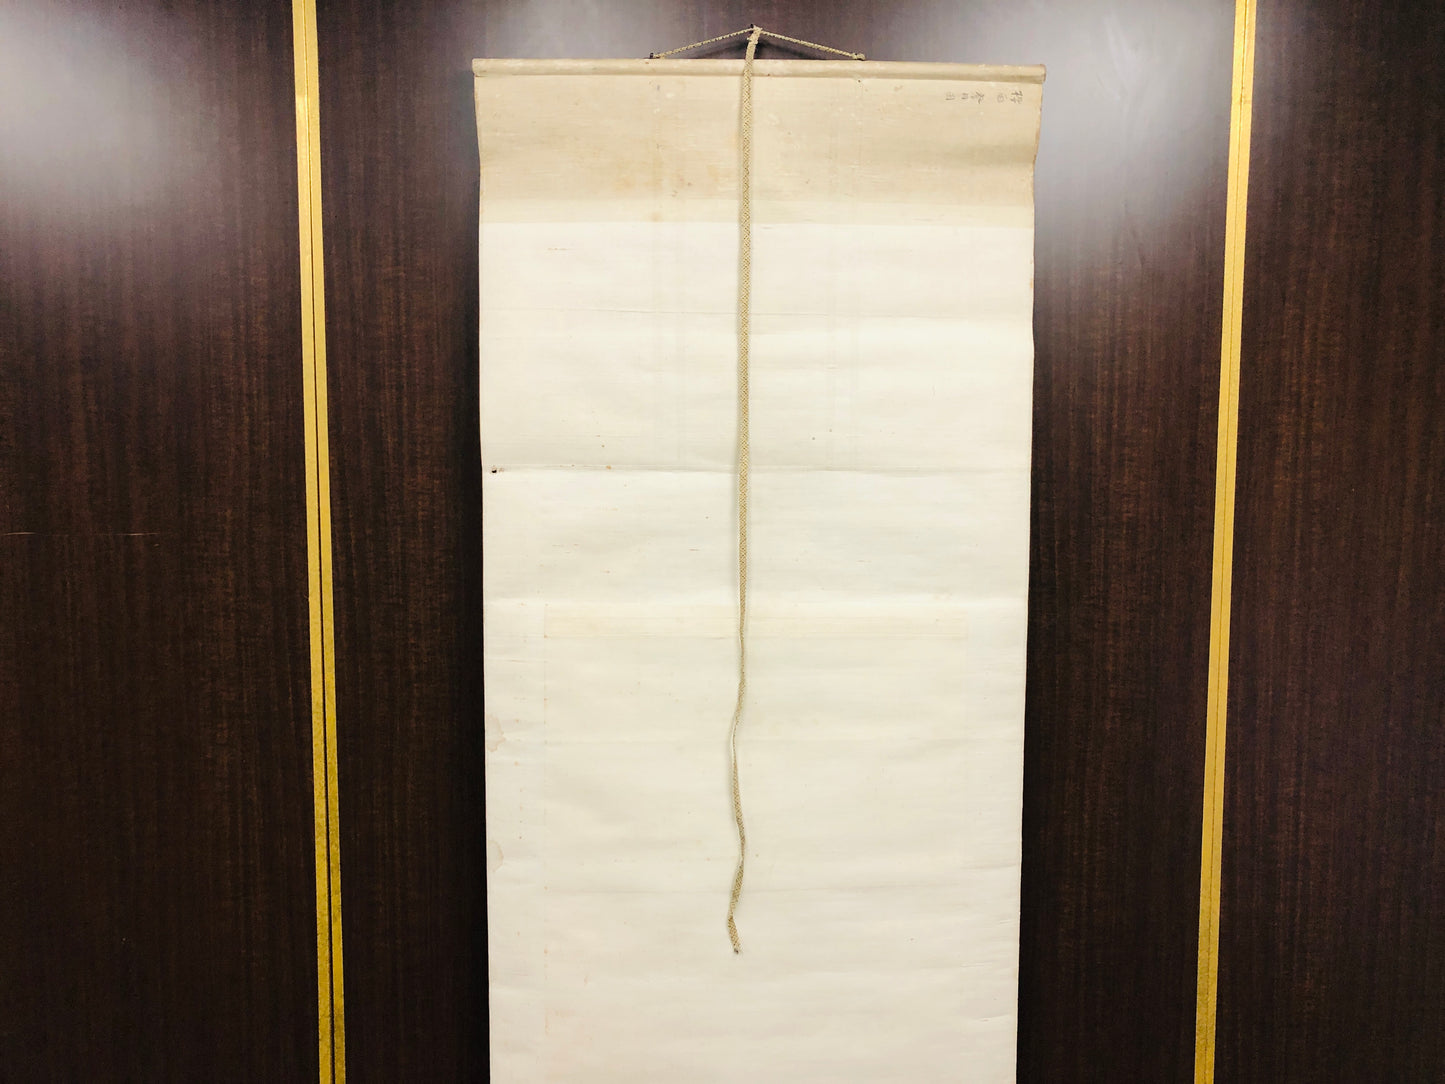 Y6348 [VIDEO] KAKEJIKU Rice planting signed box Japan antique hanging scroll art decor